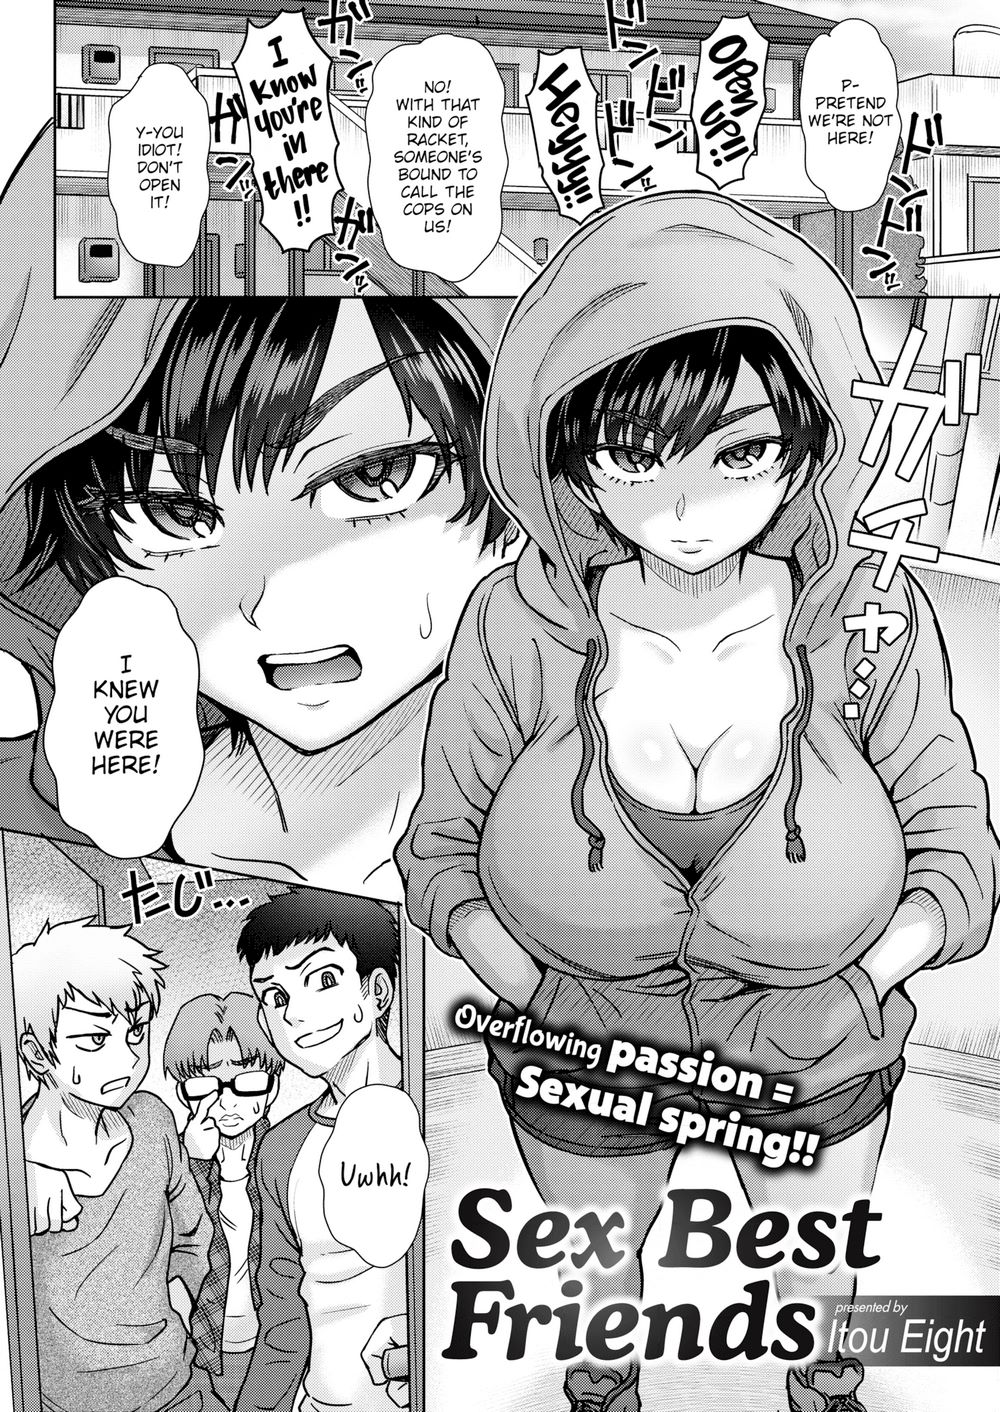 Sex best friends manga